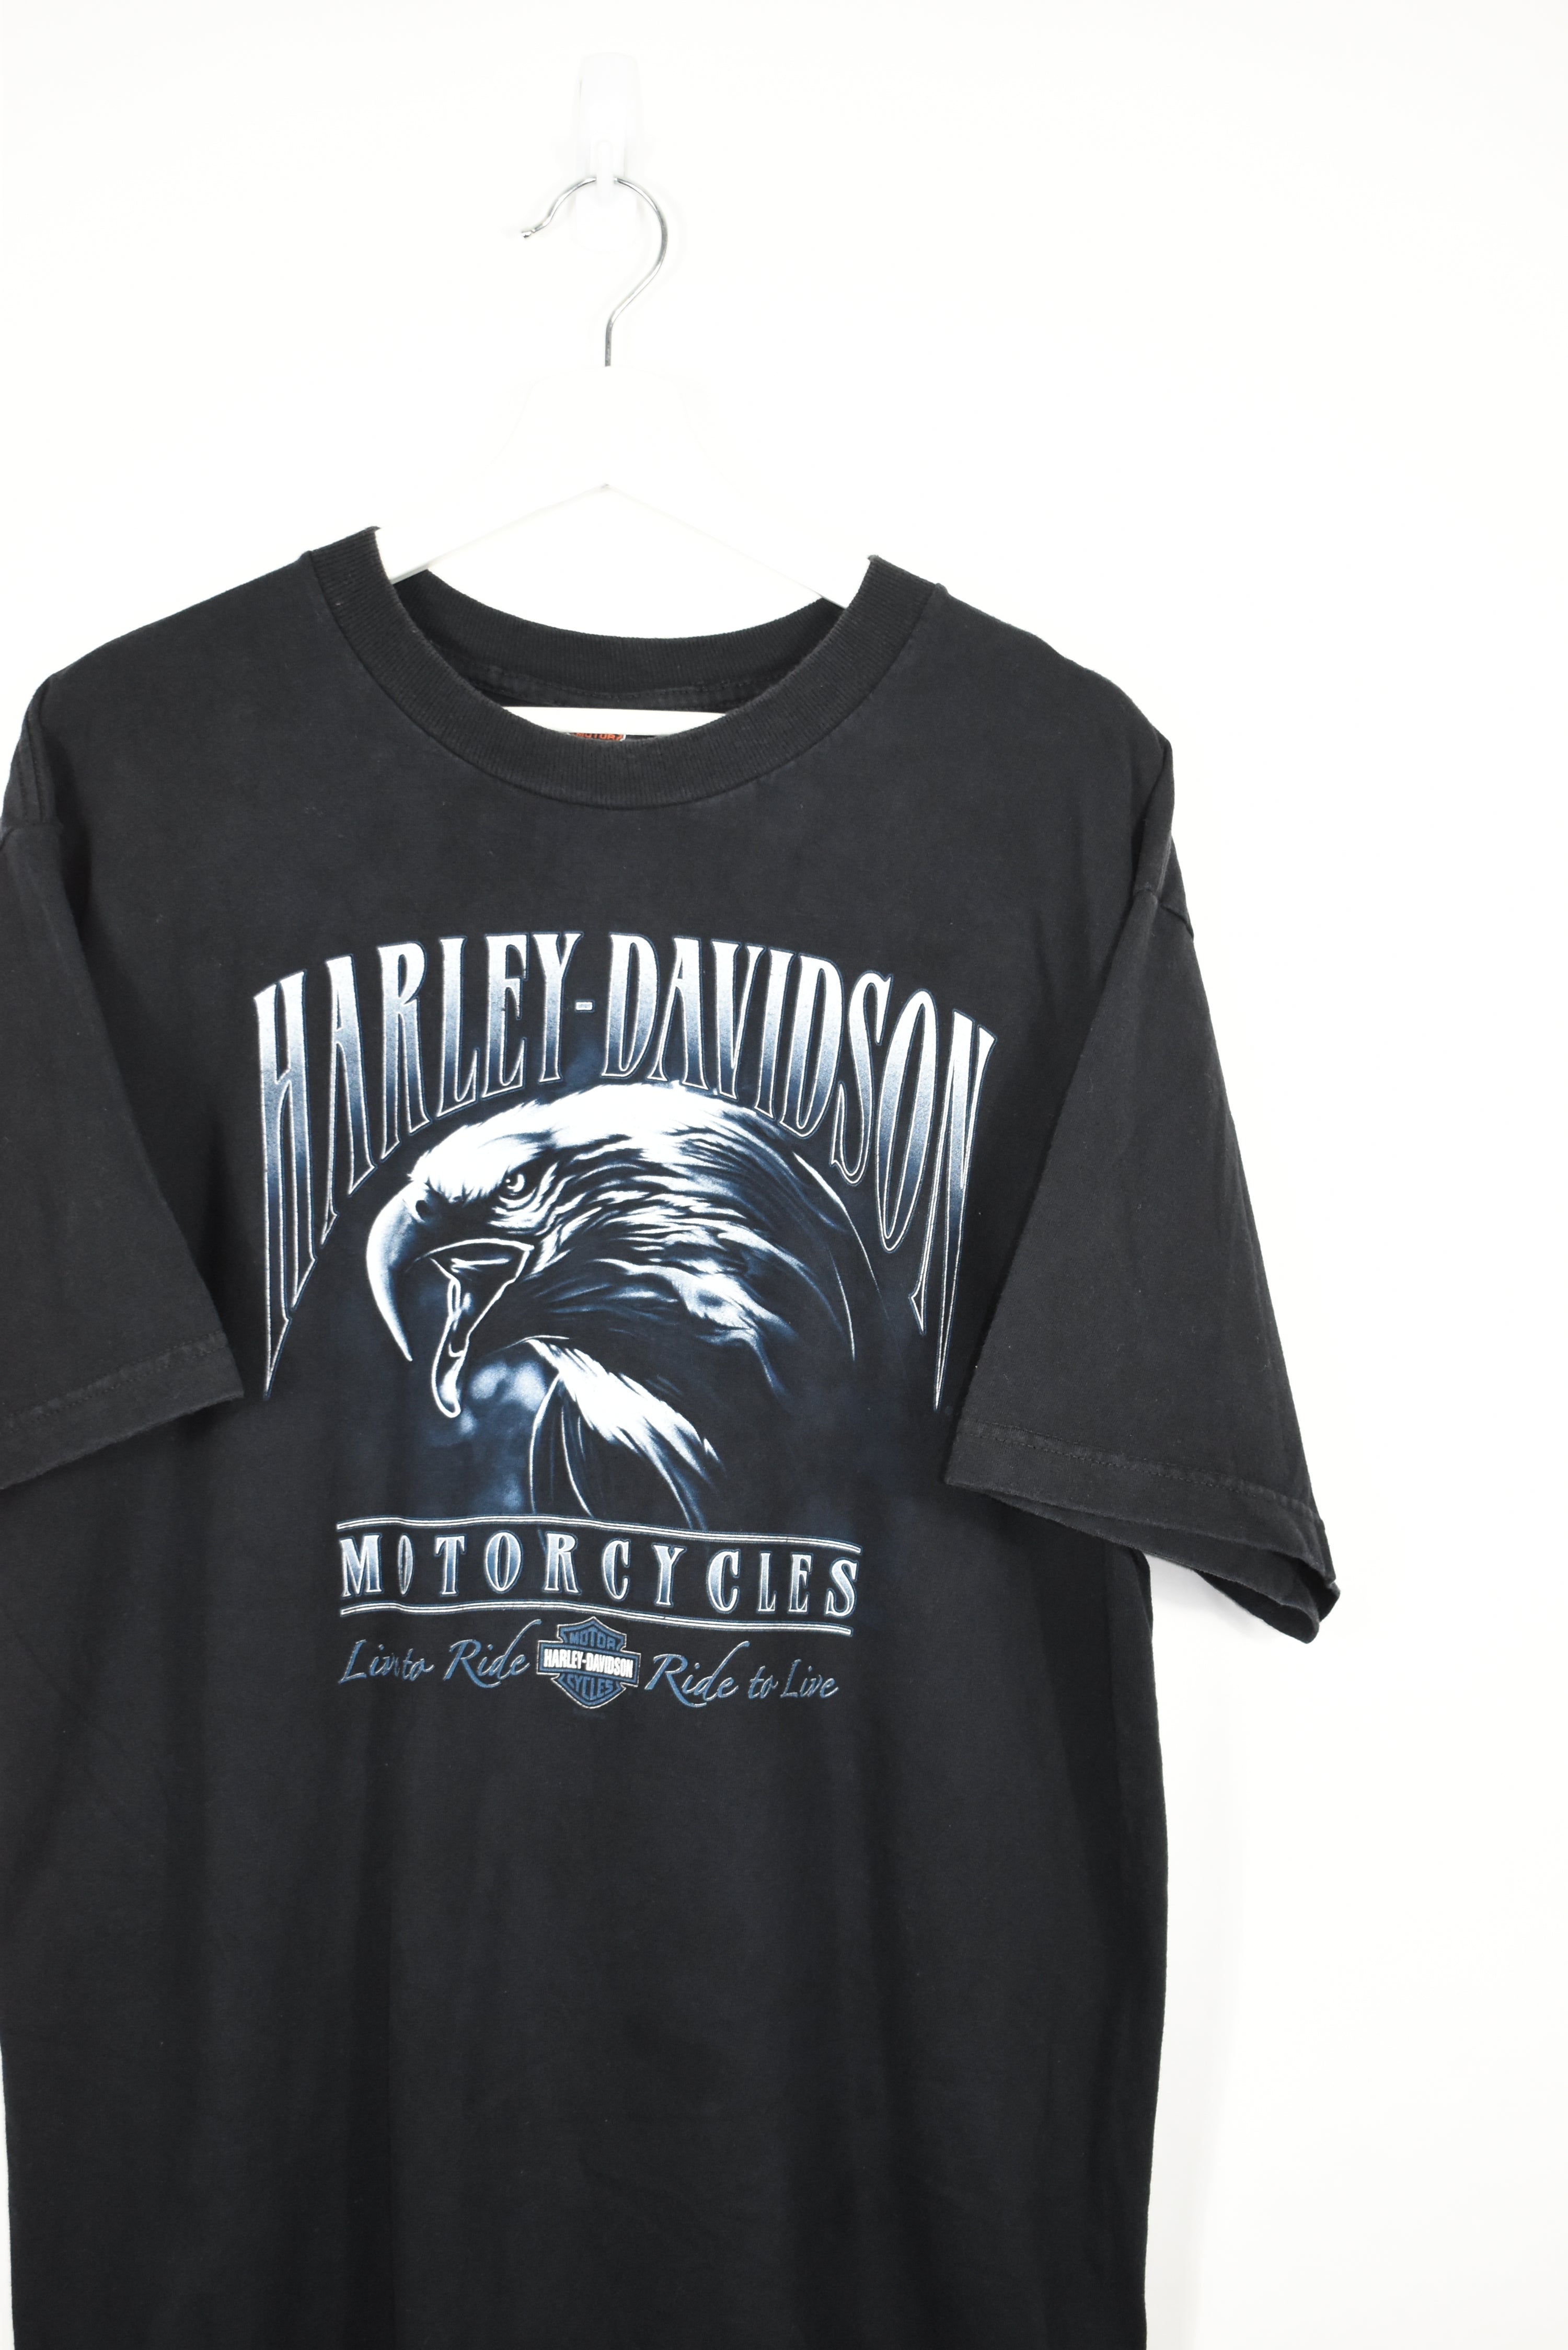 Vintage Harley Davidson T Shirt Xlarge